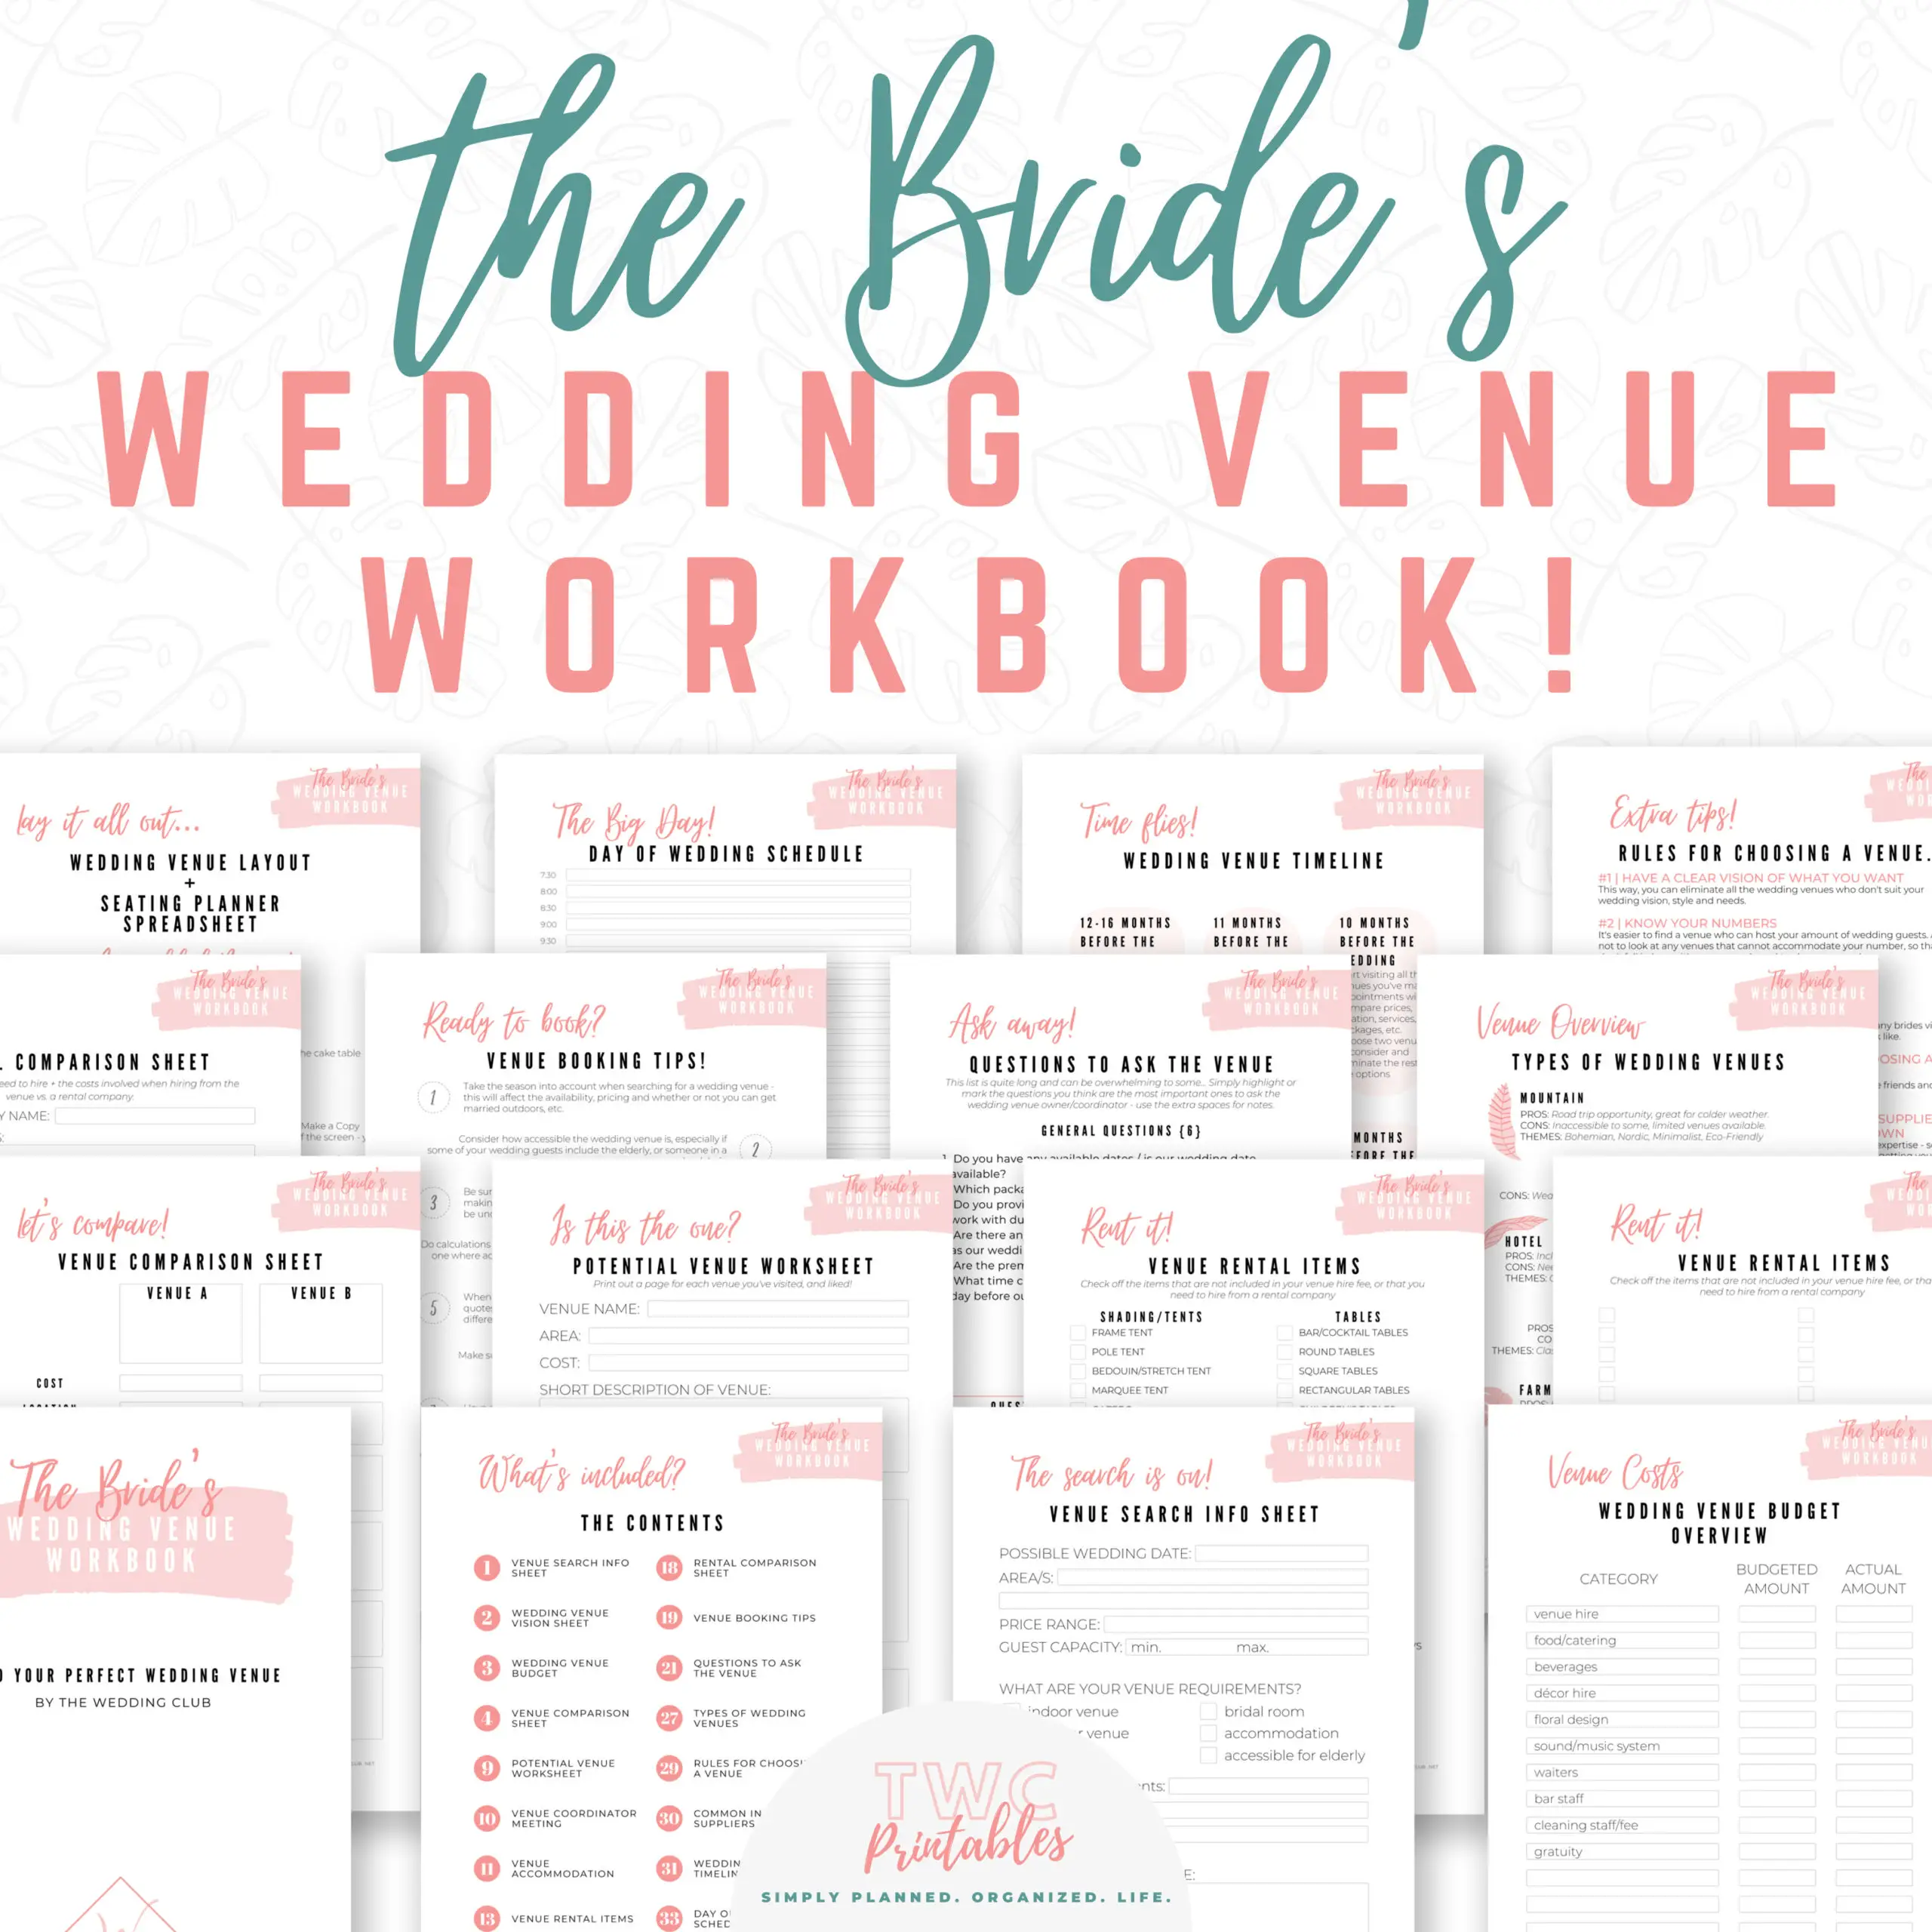 Brides Wedding Venue Workbook